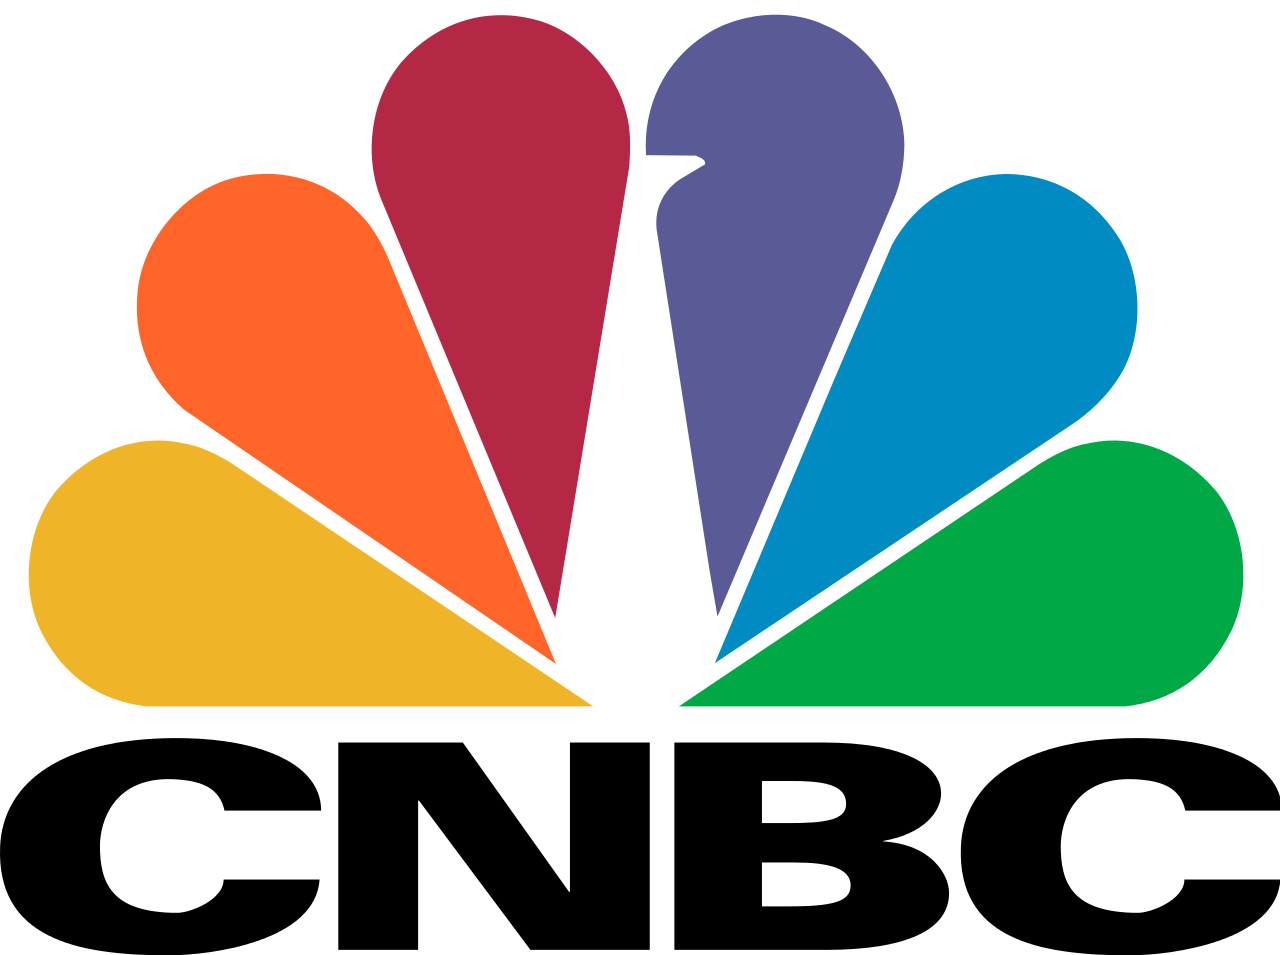 CNBC_logo.svg.png